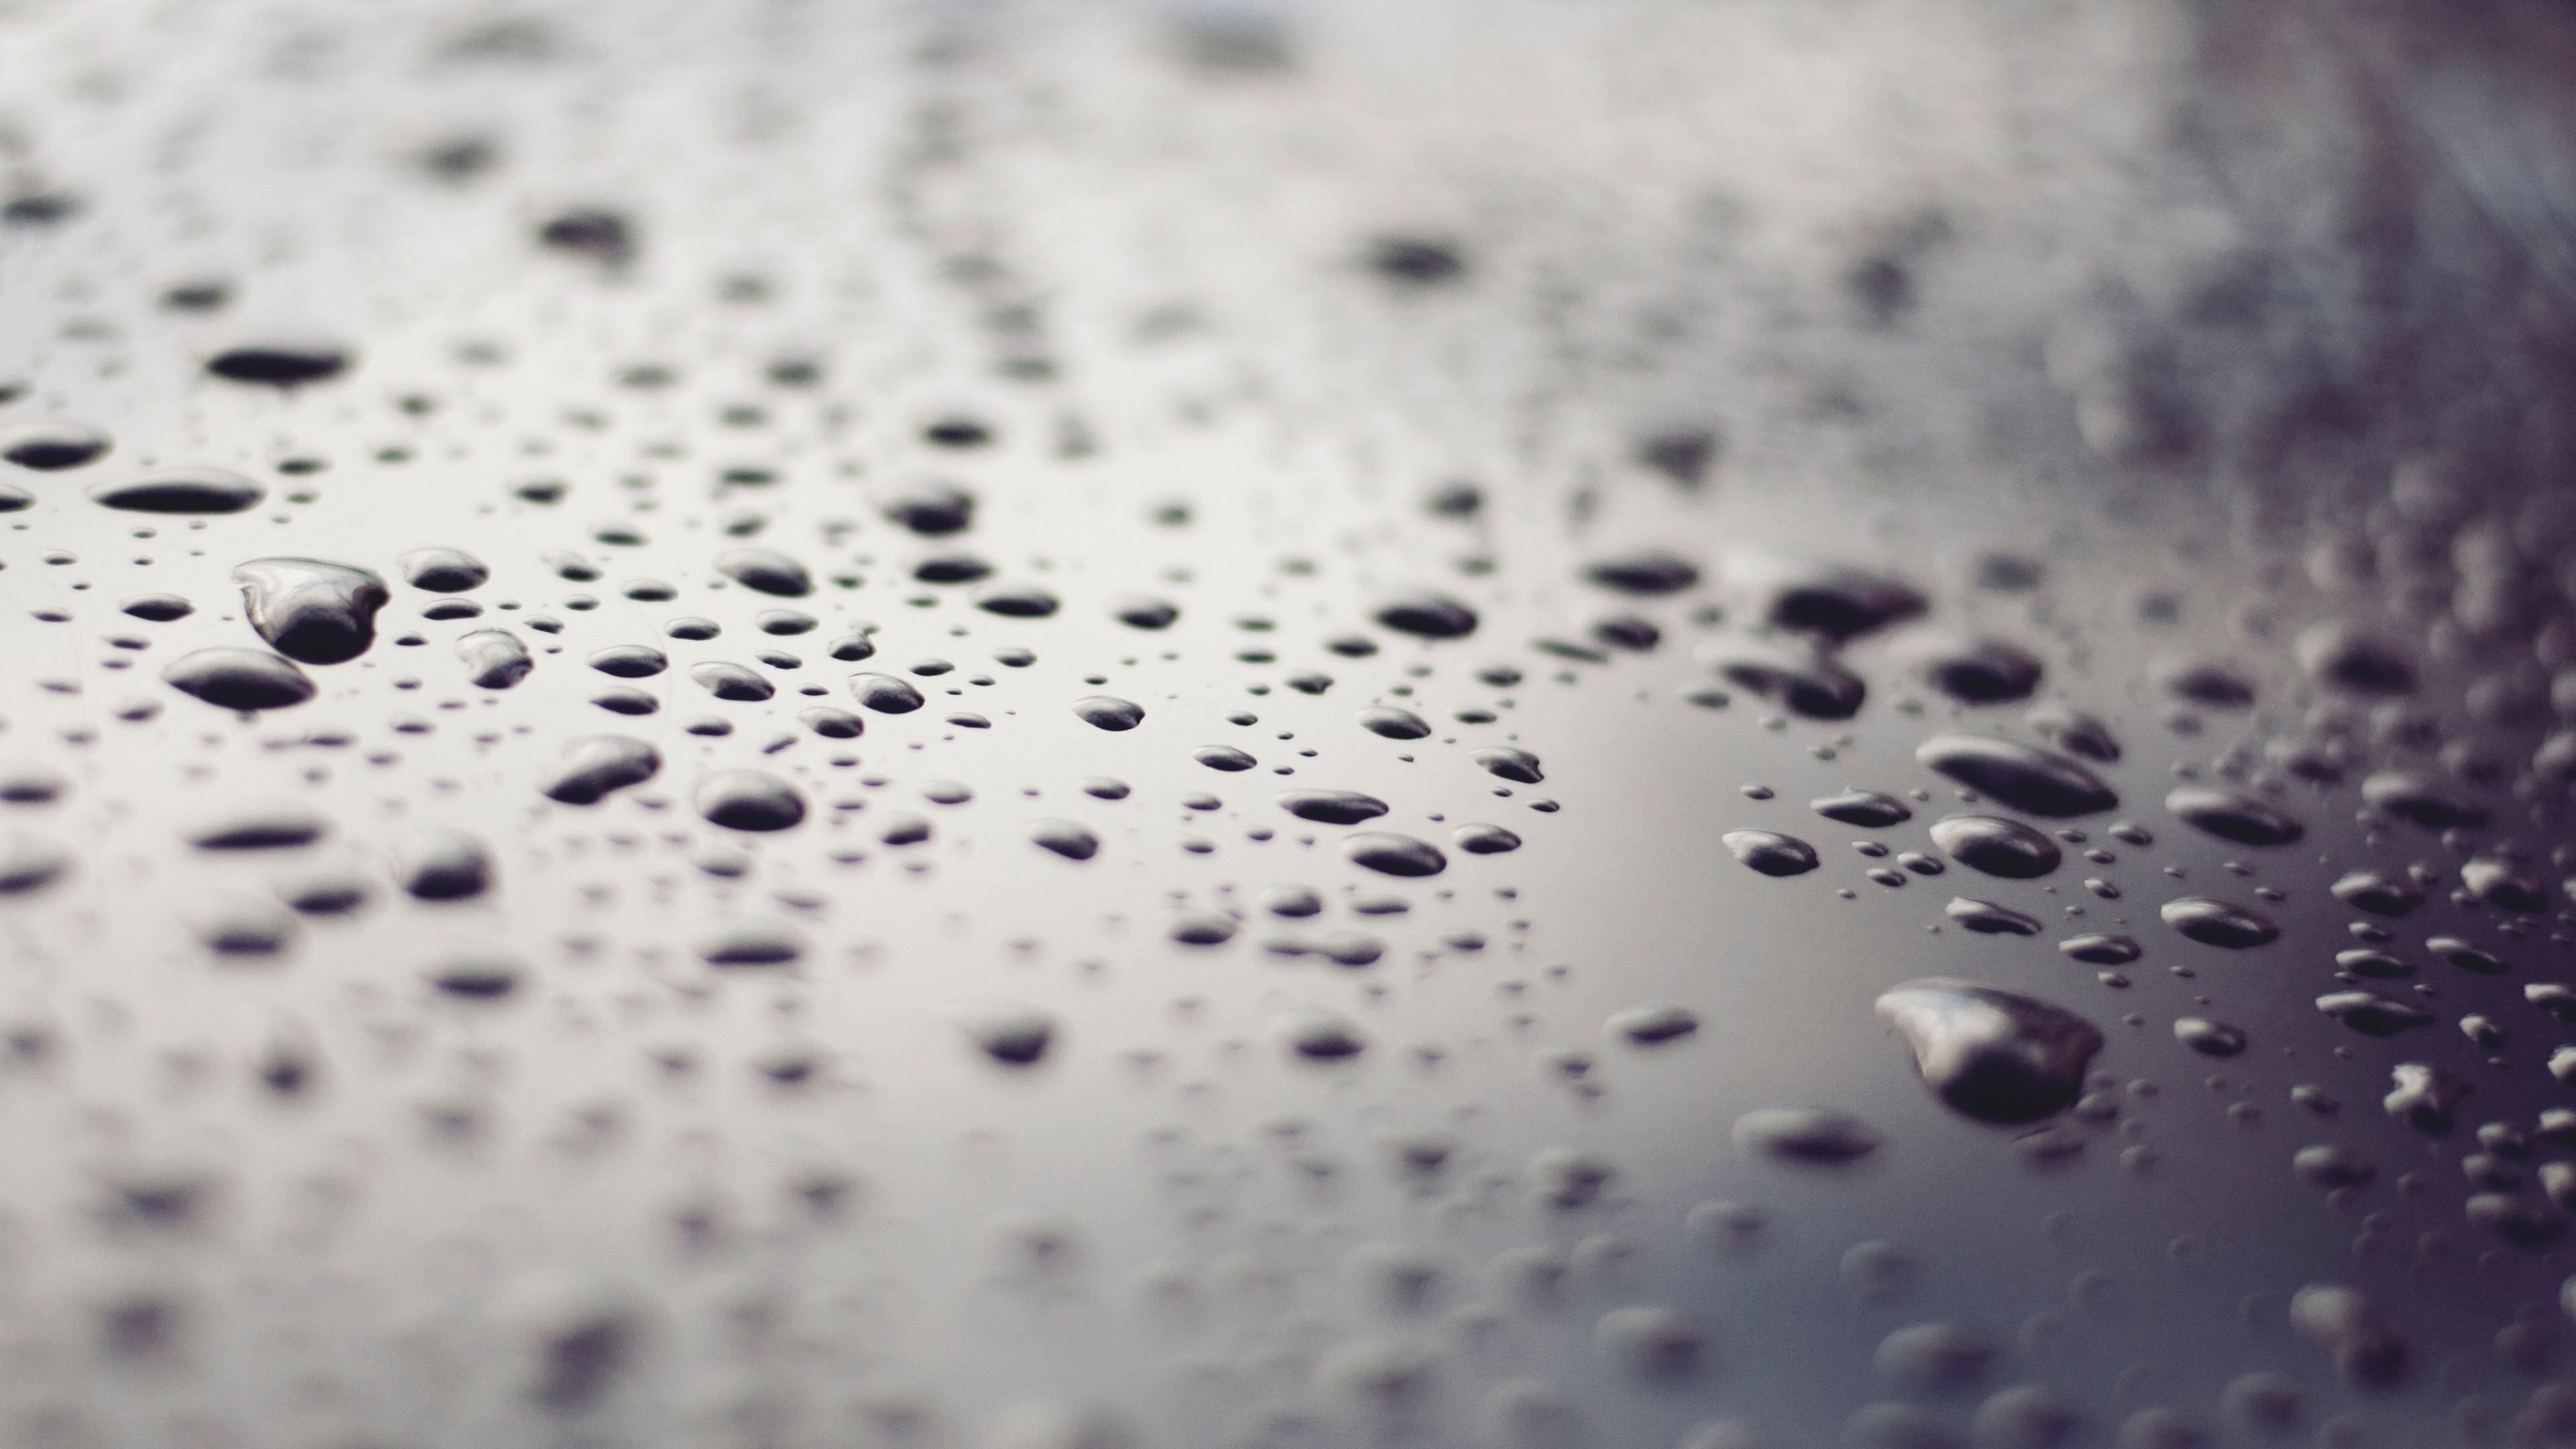 Raindrops on a metallic surface wallpaper 3840x2160